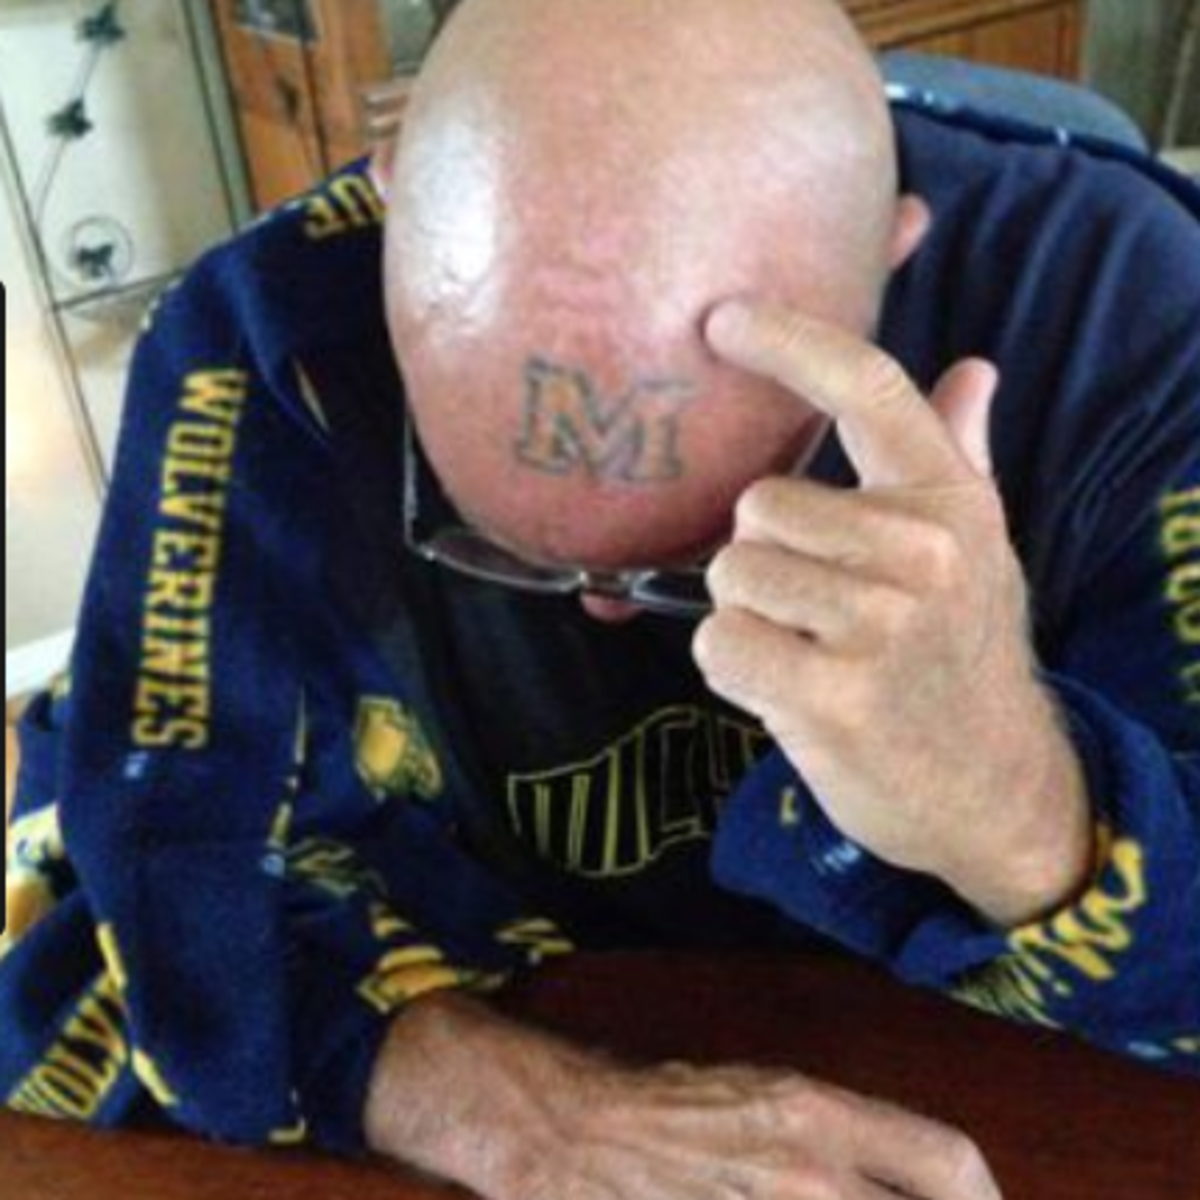 Michigan Wolverines Tattoos